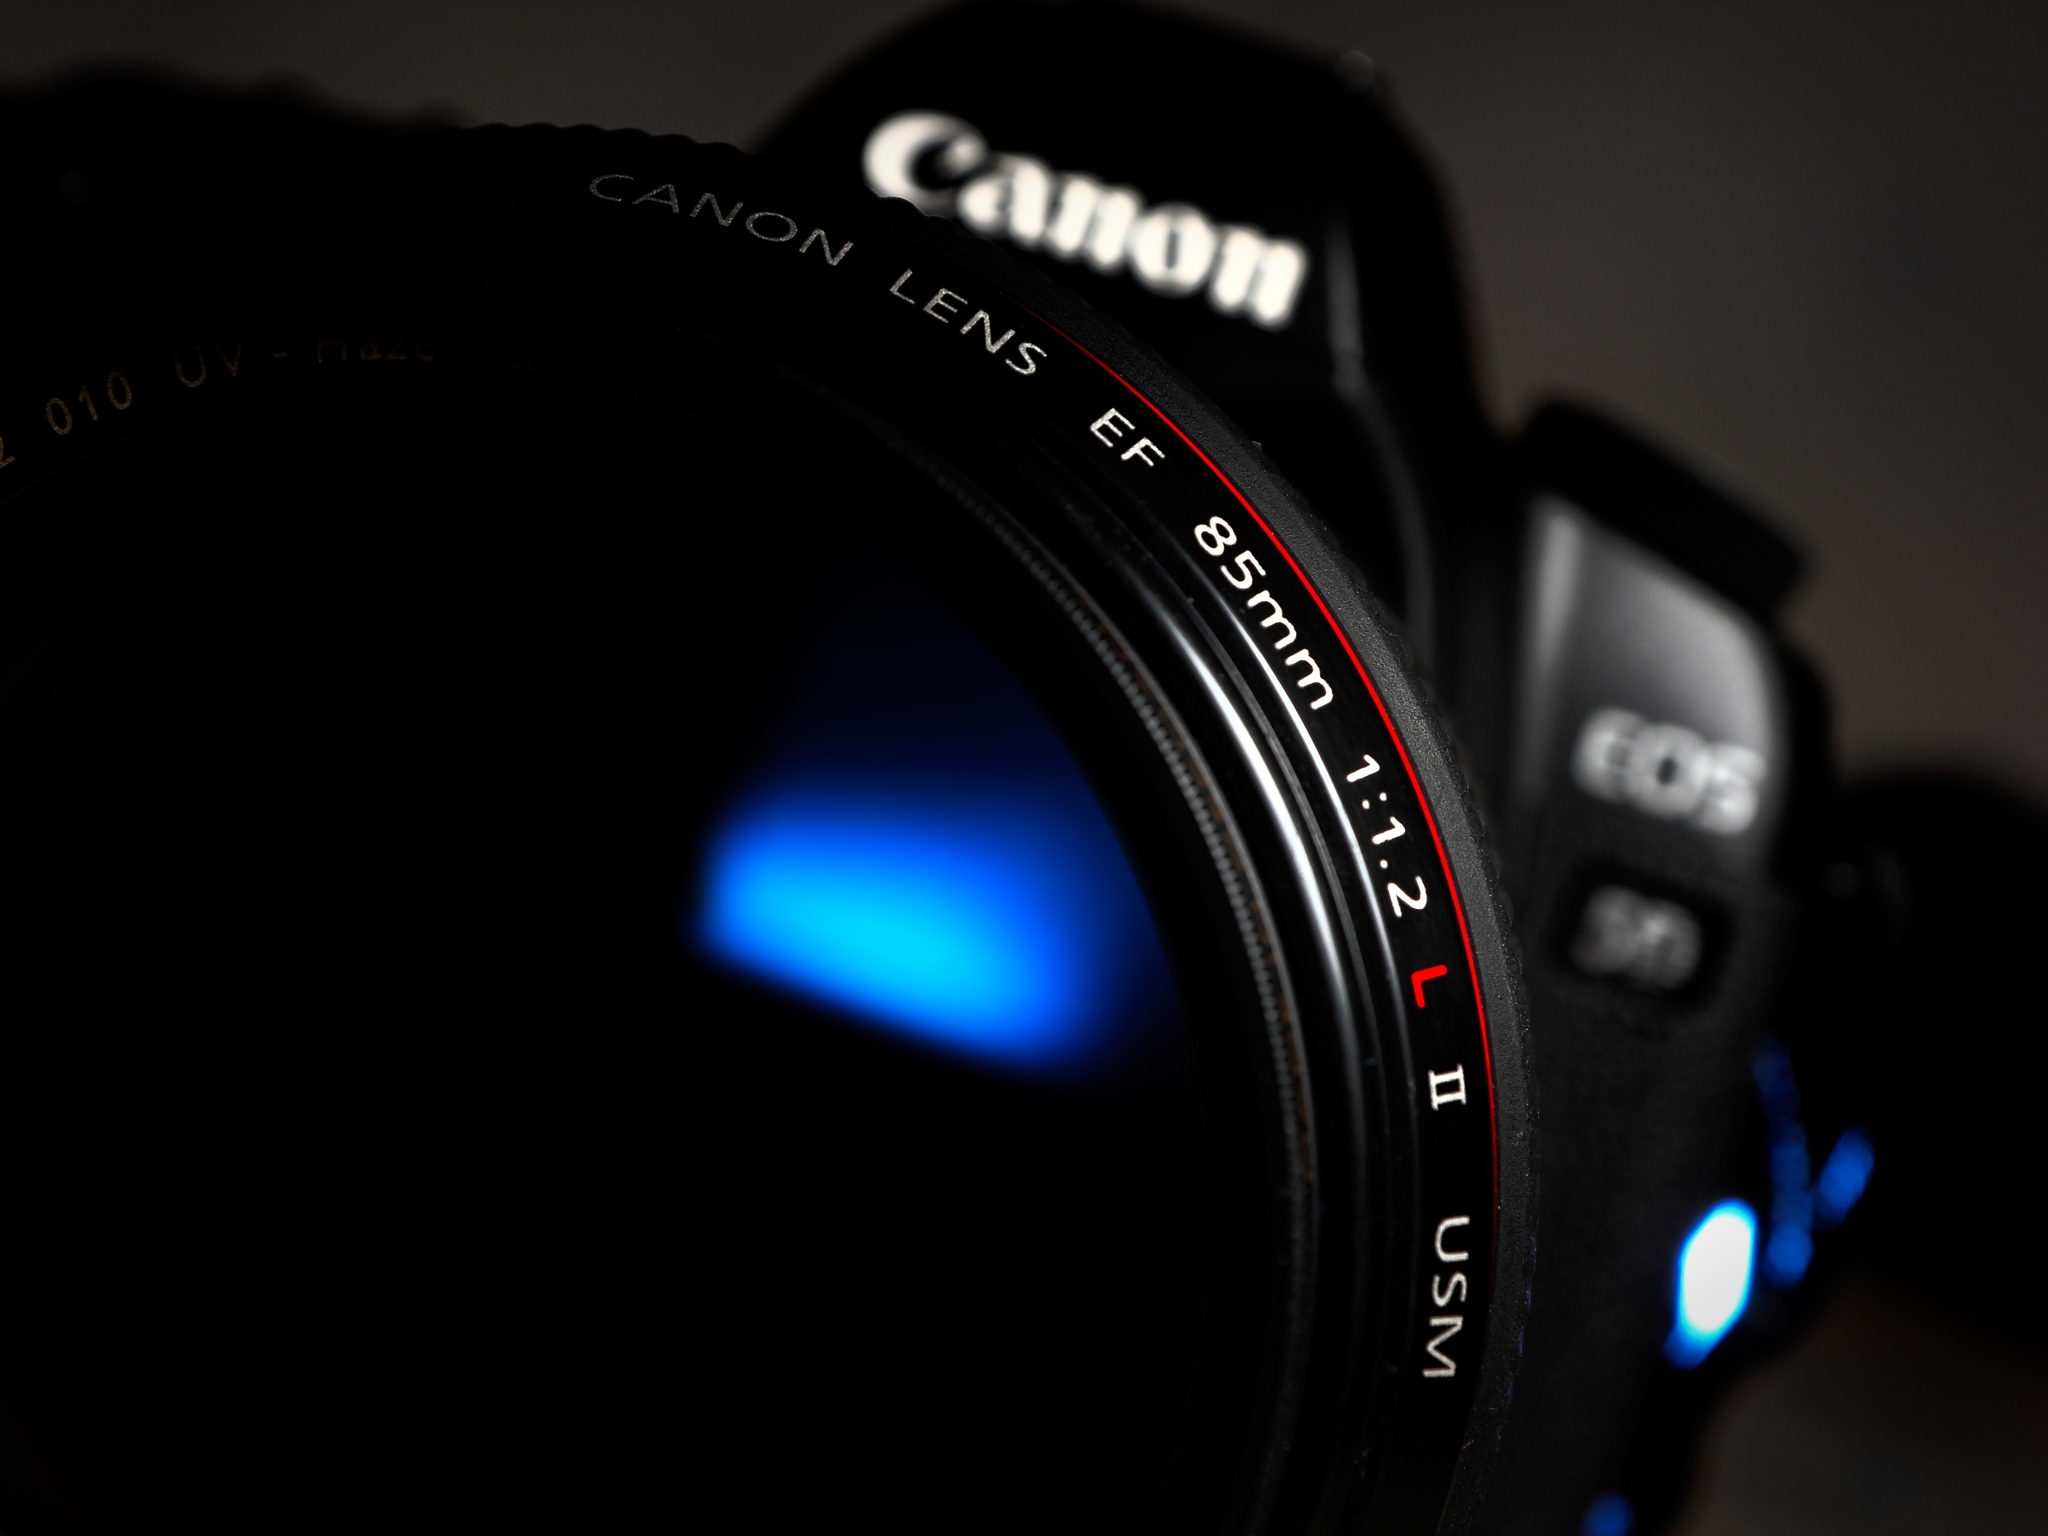 Image: Camera, Canon, lens, camera, macro